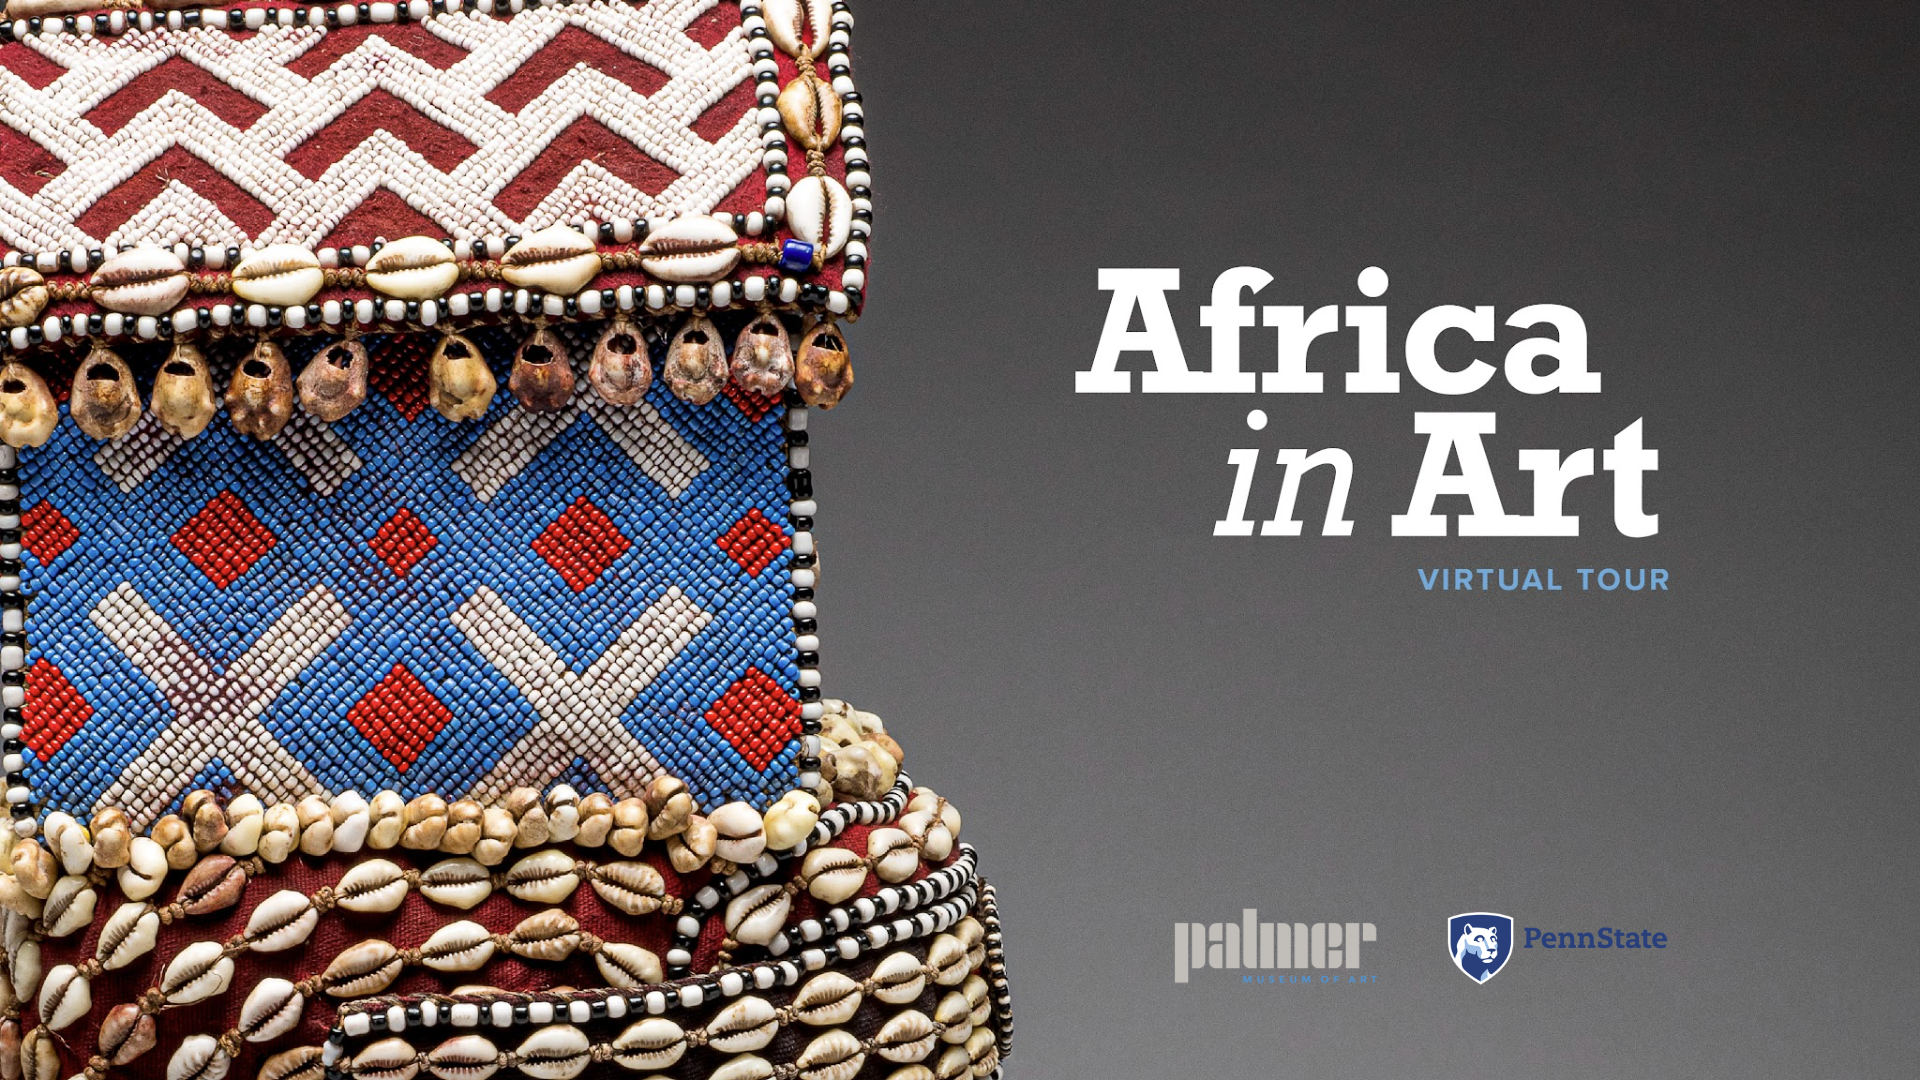 Africa in Art virtual tour